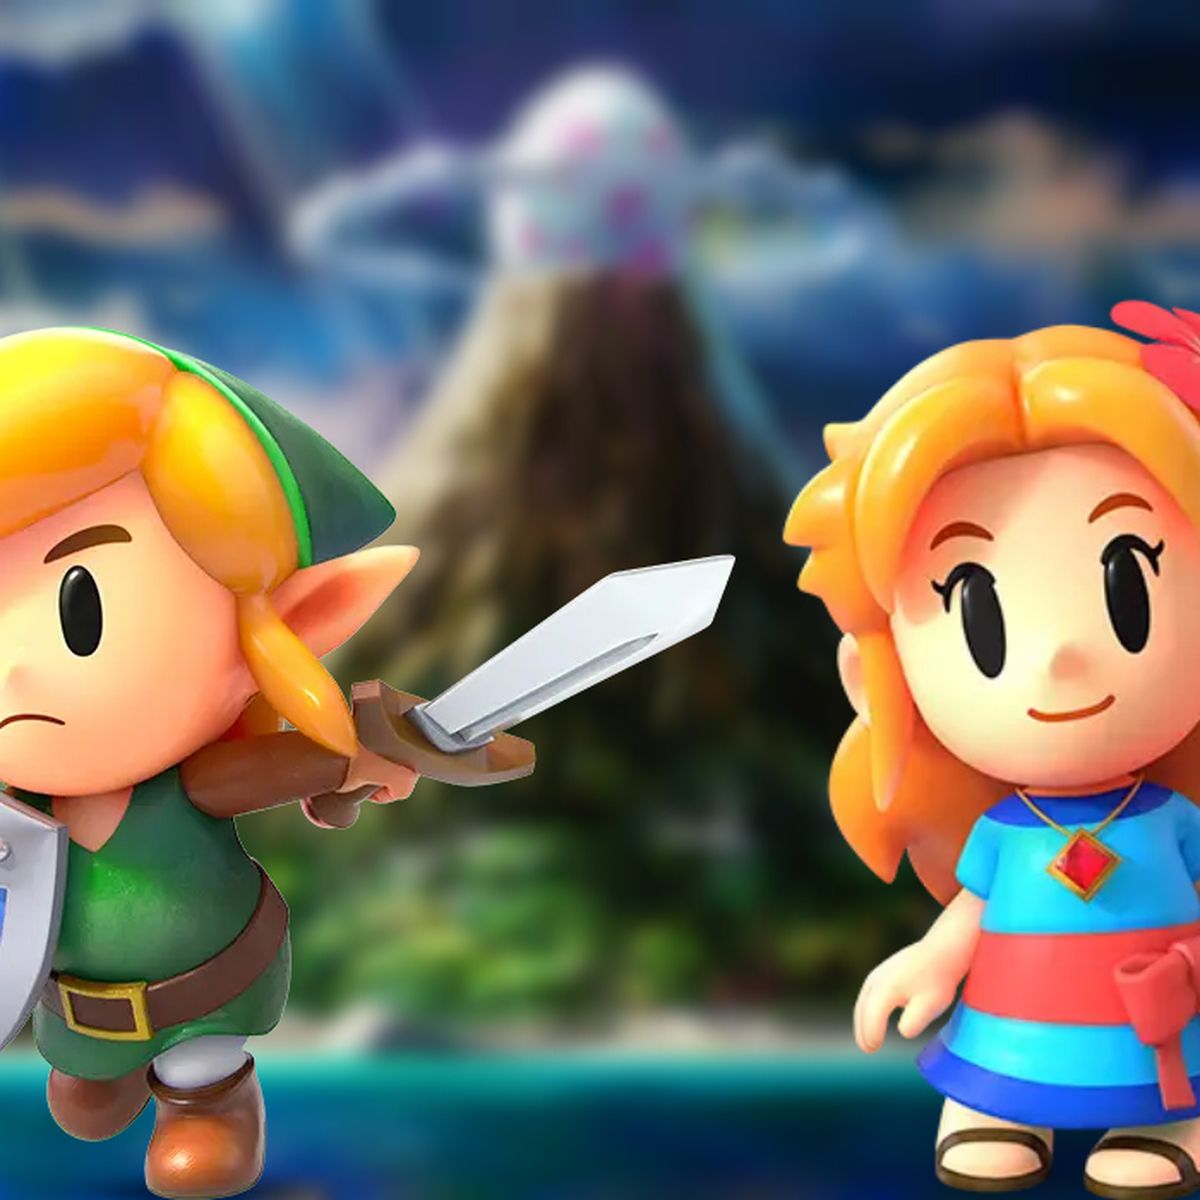 The Legend of Zelda: Link's Awakening, Nintendo Switch, [Physical], 110249  